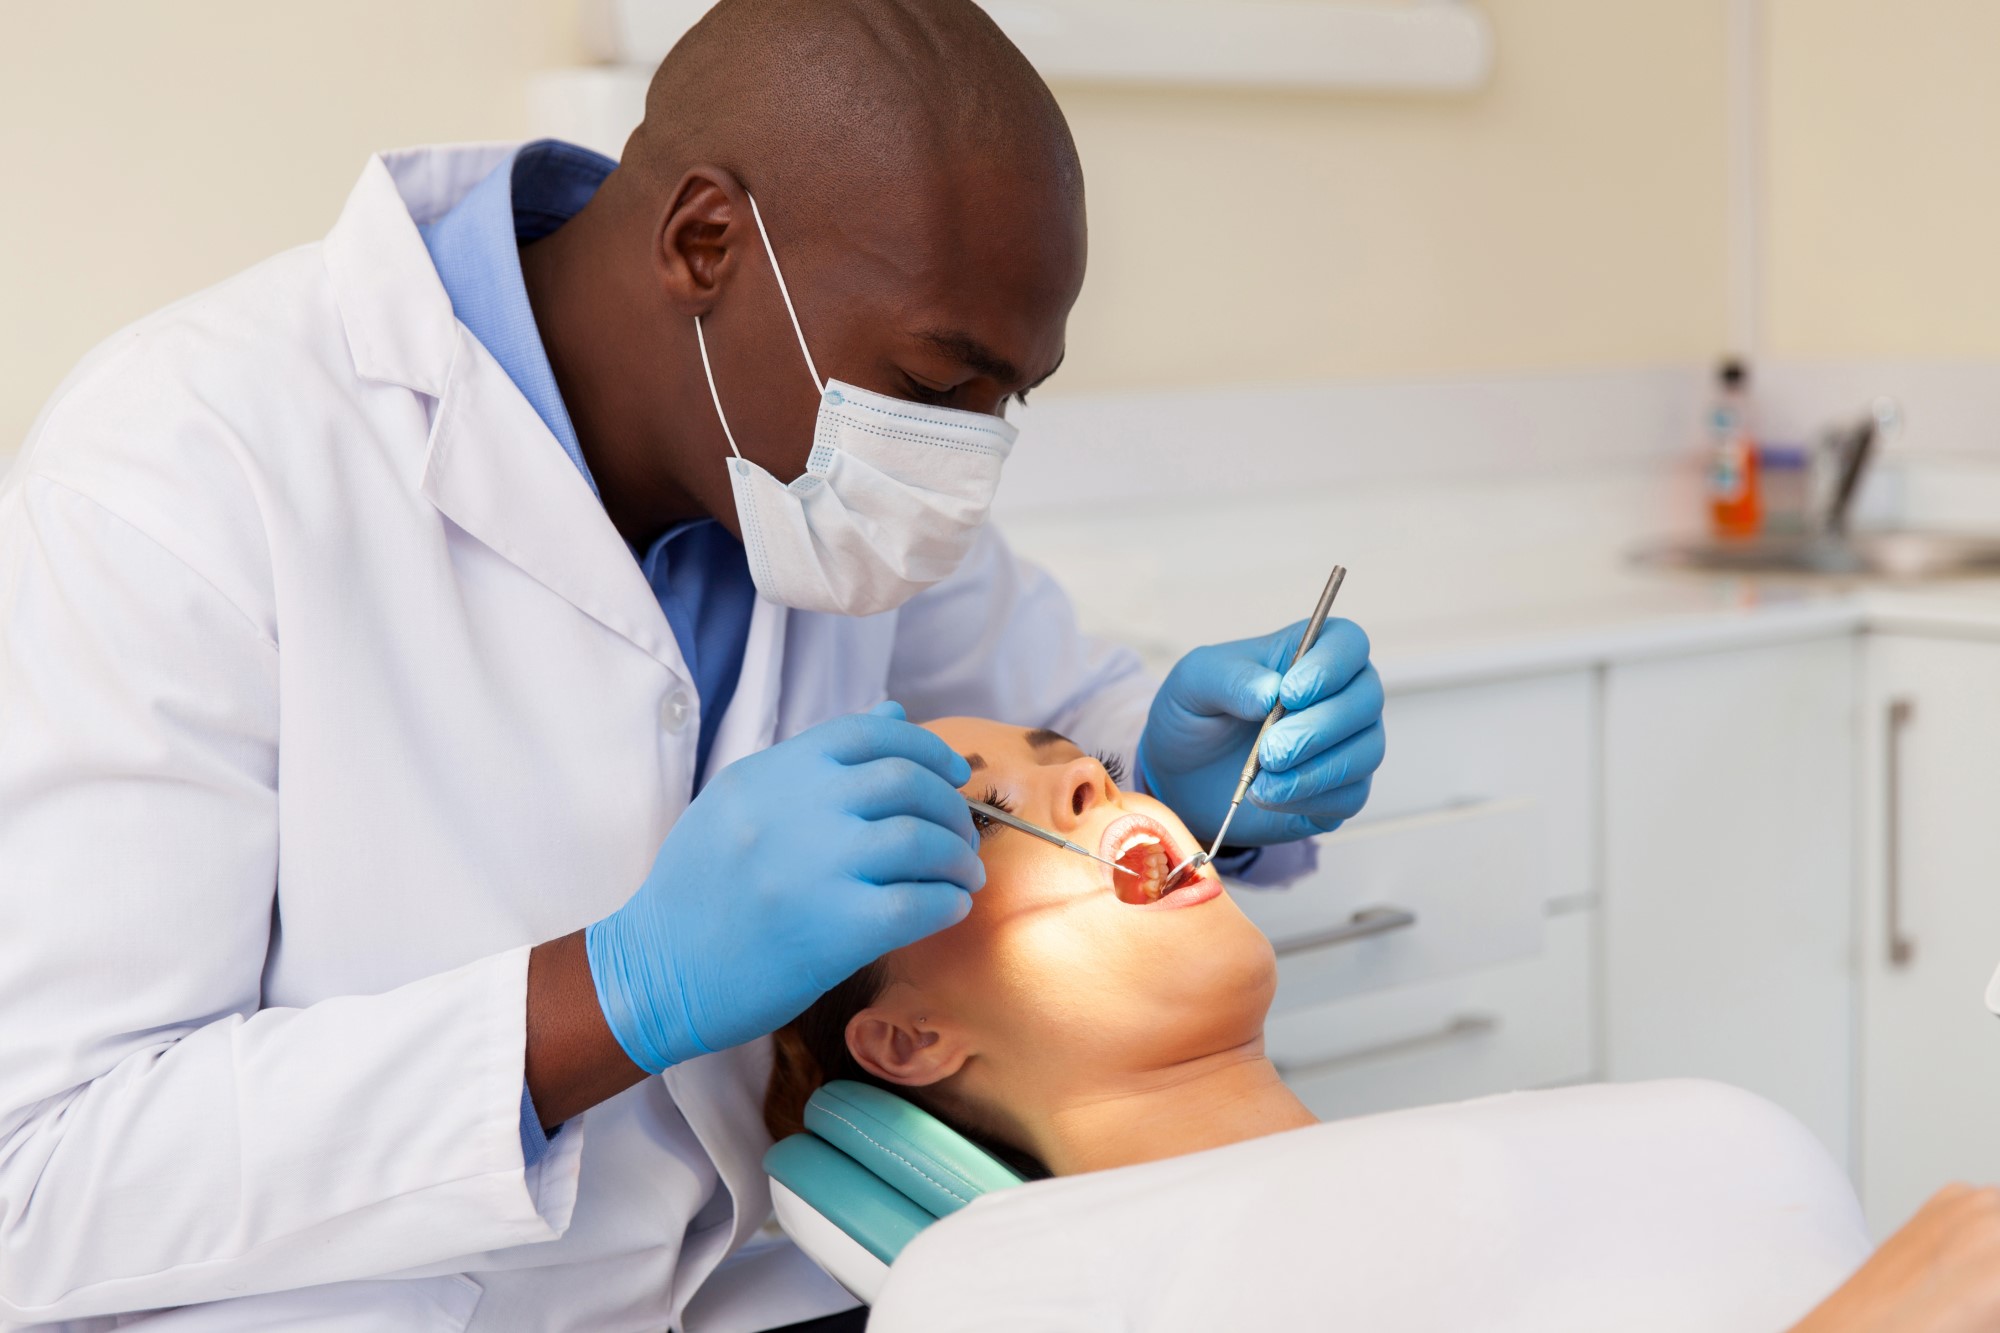 Dentist visit underway with dentist inspecting patient's teeth